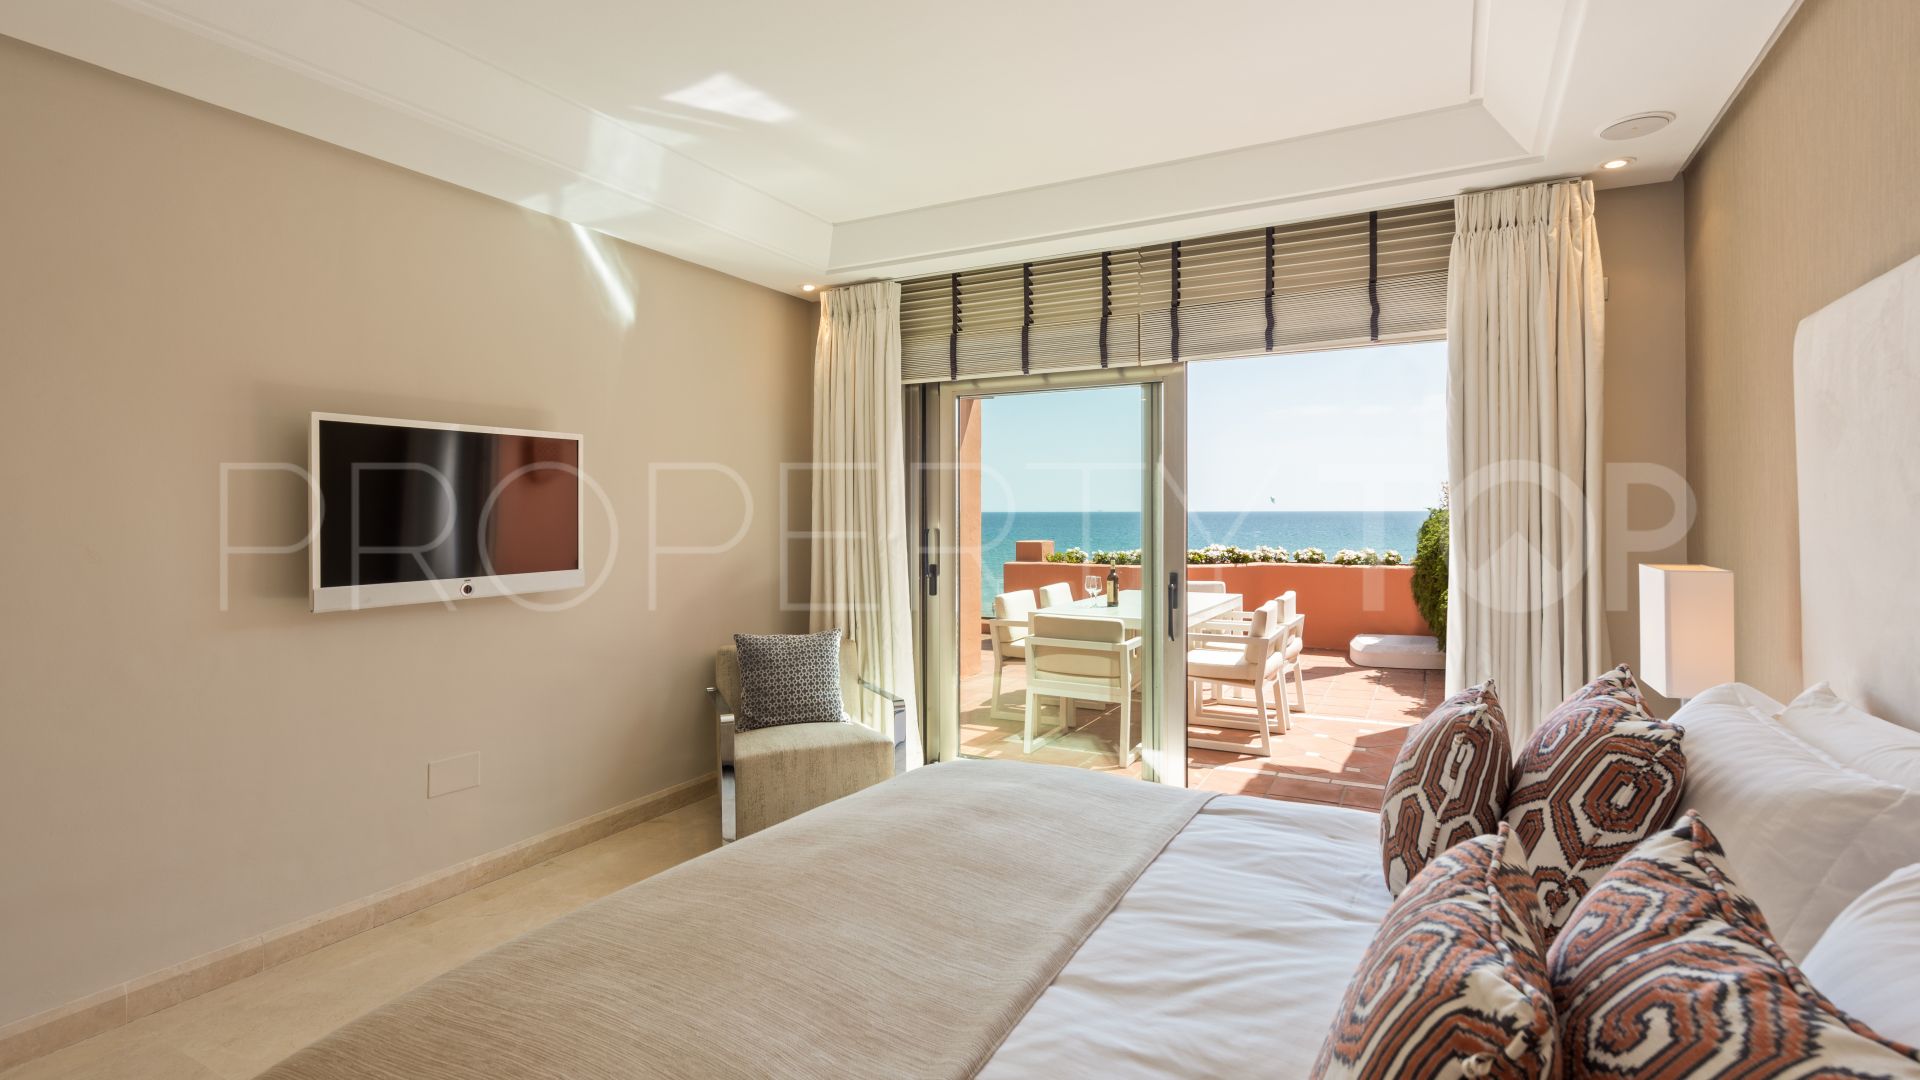 3 bedrooms duplex penthouse in La Morera for sale